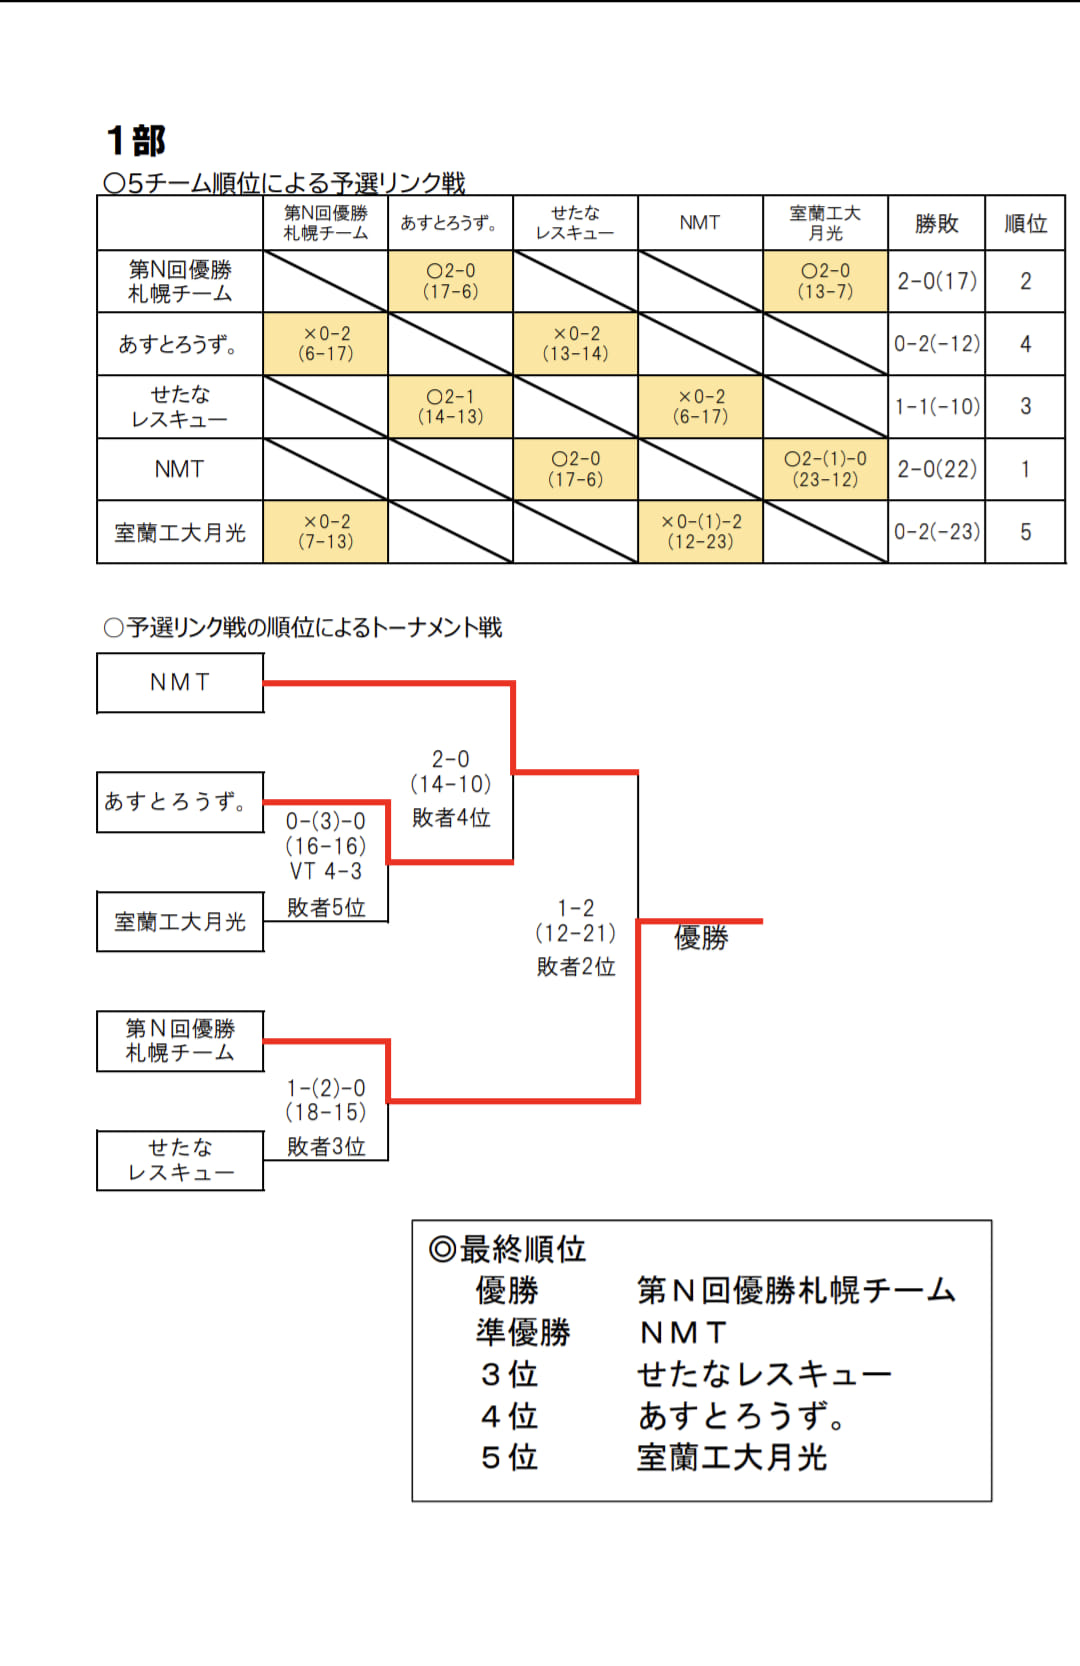 http://www.yukigassen-sapporo.jp/info/up_images/23_%E9%81%93%E9%81%B8%E6%89%8B%E6%A8%A91%E9%83%A8%E7%B5%90%E6%9E%9C.jpg